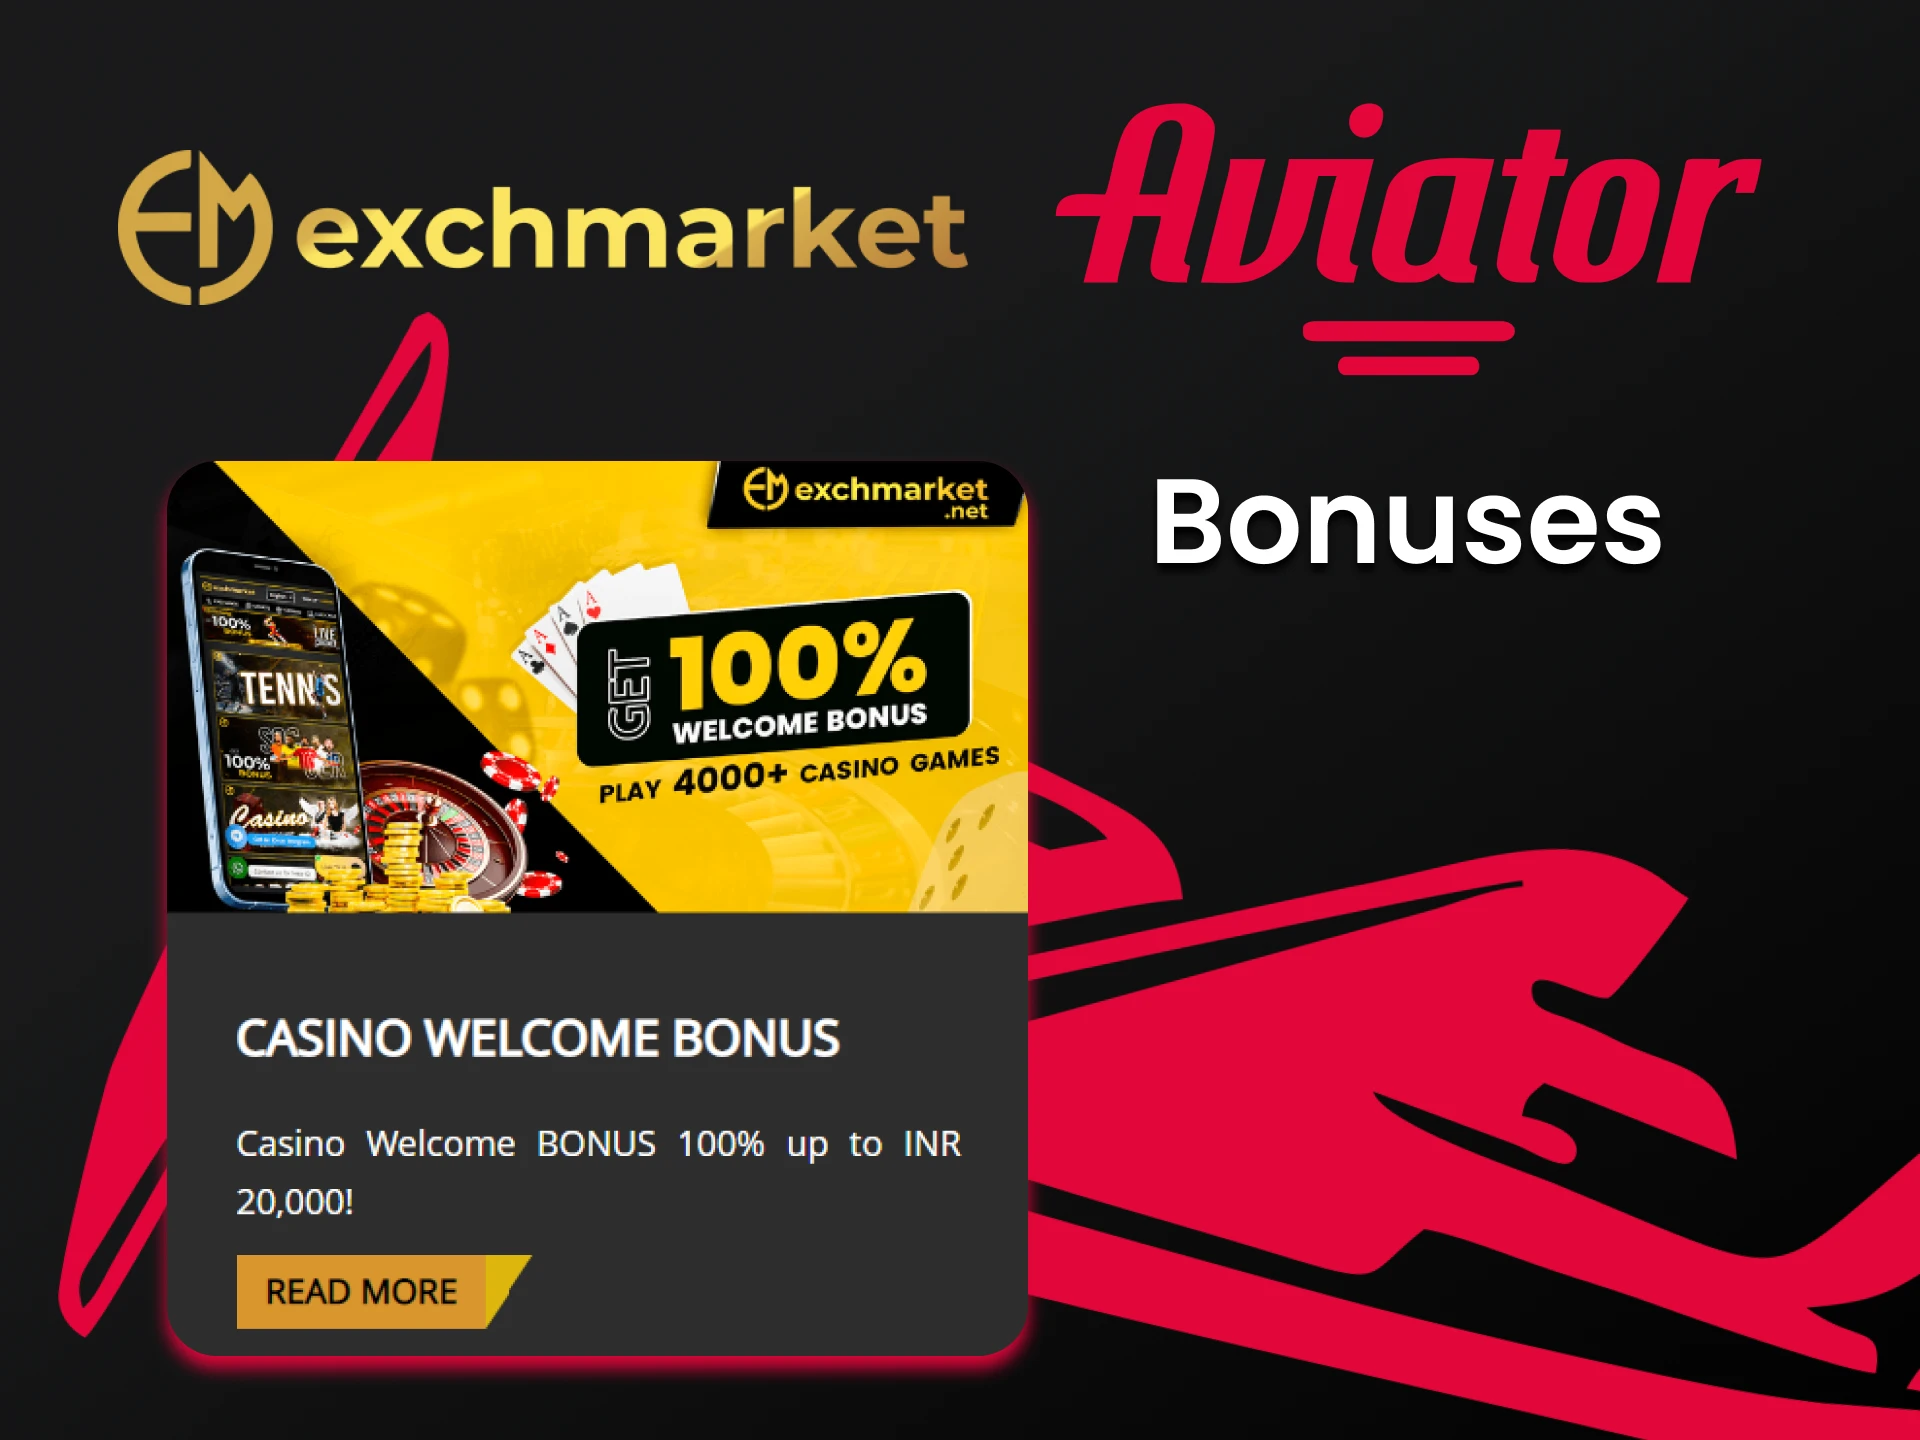 Get bonuses from Exchmarket.